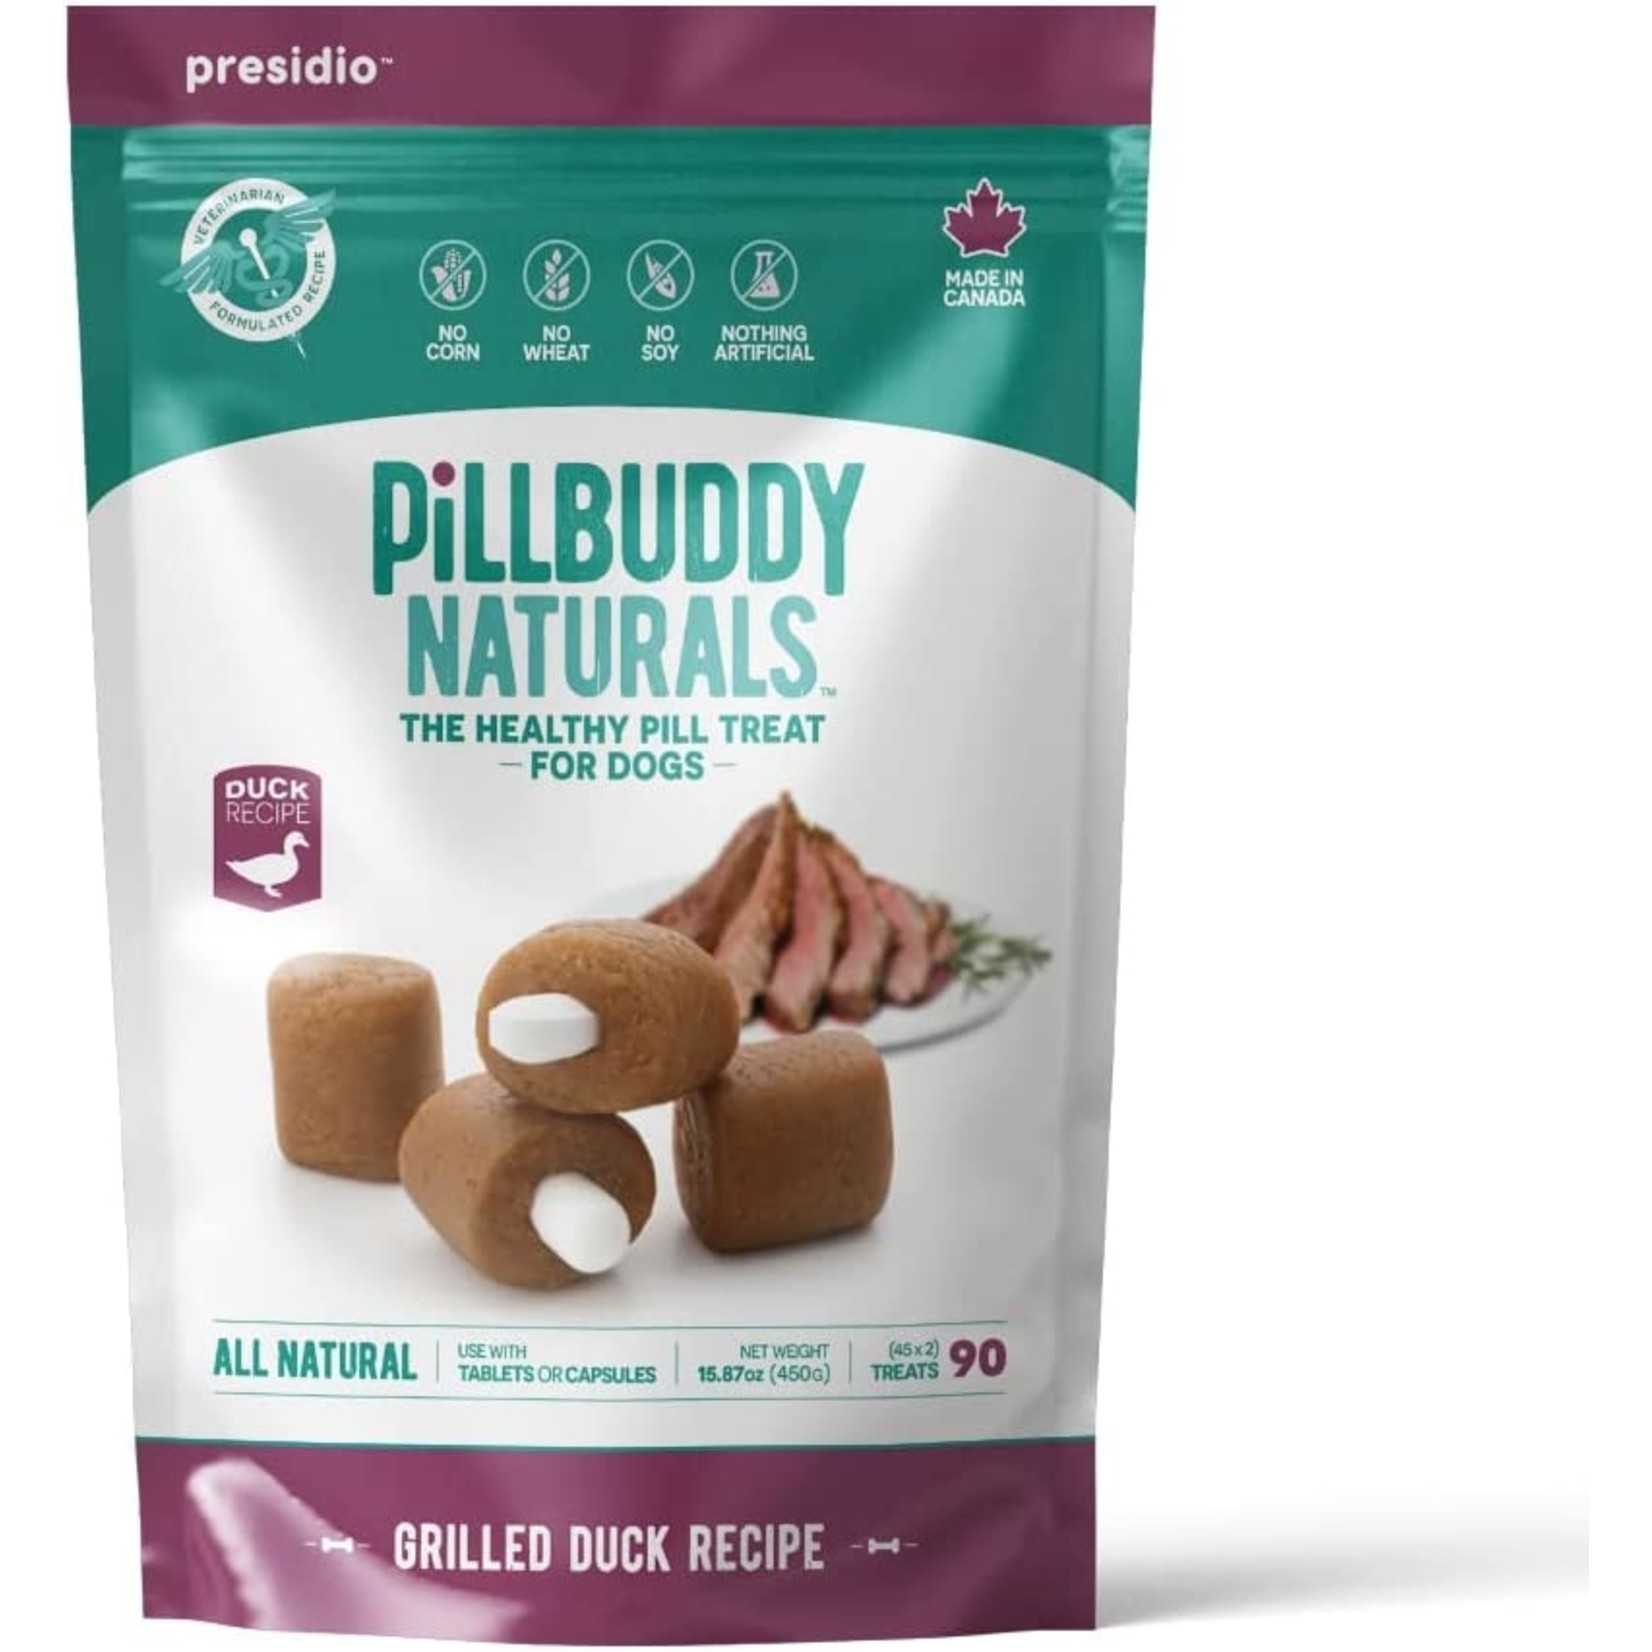 Presidio Natural Pet Co. Presidio PillBuddy Naturals - Grilled Duck